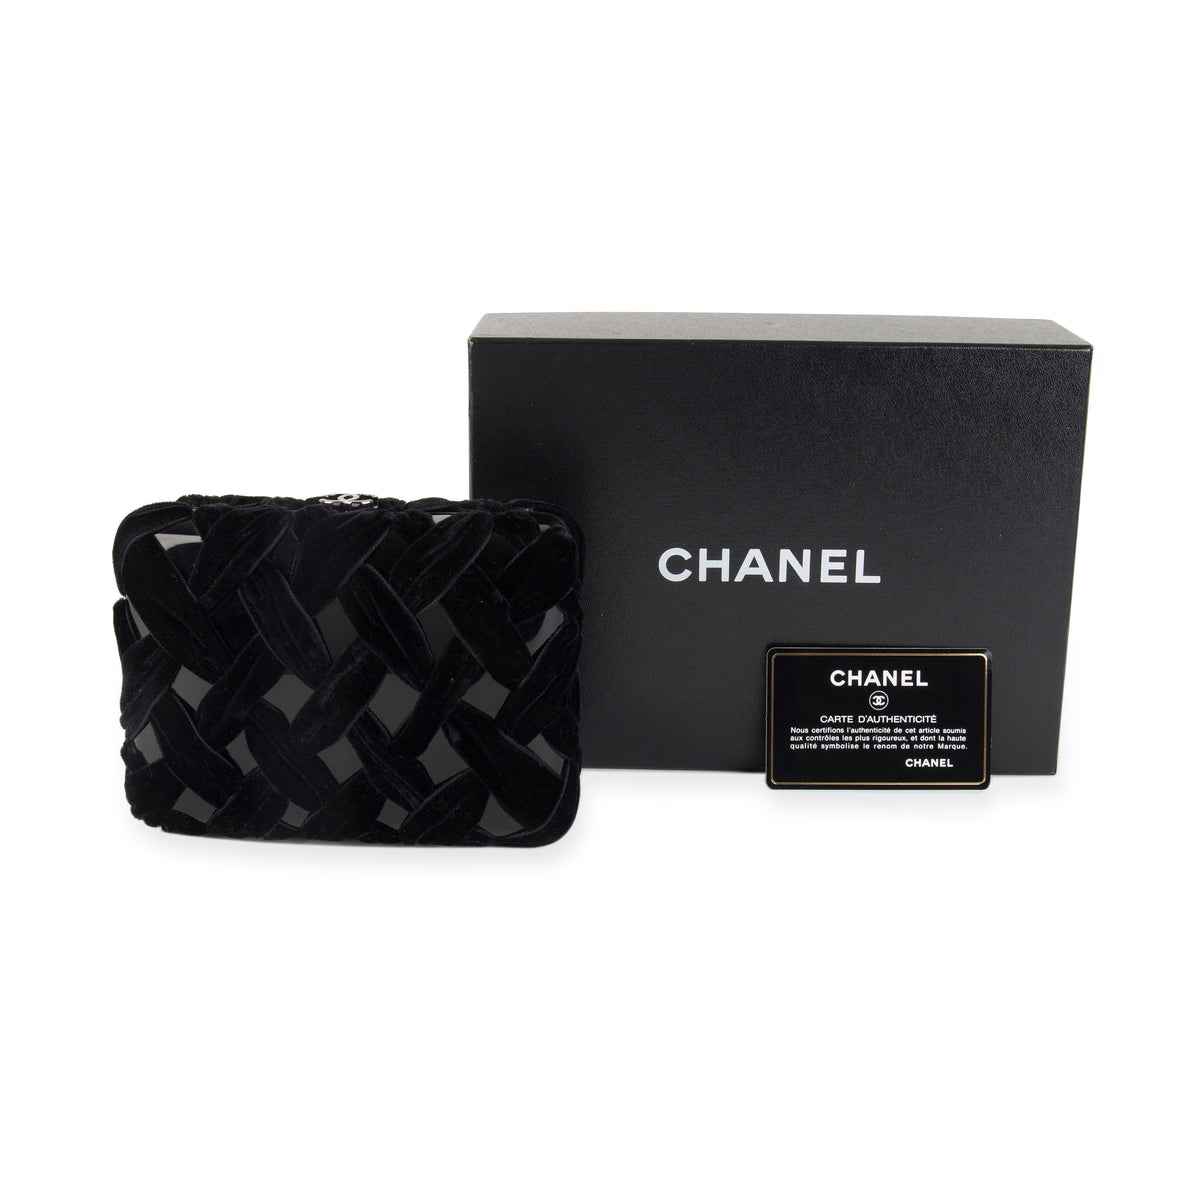 Chanel Black Velvet & Resin Box Clutch with Chain